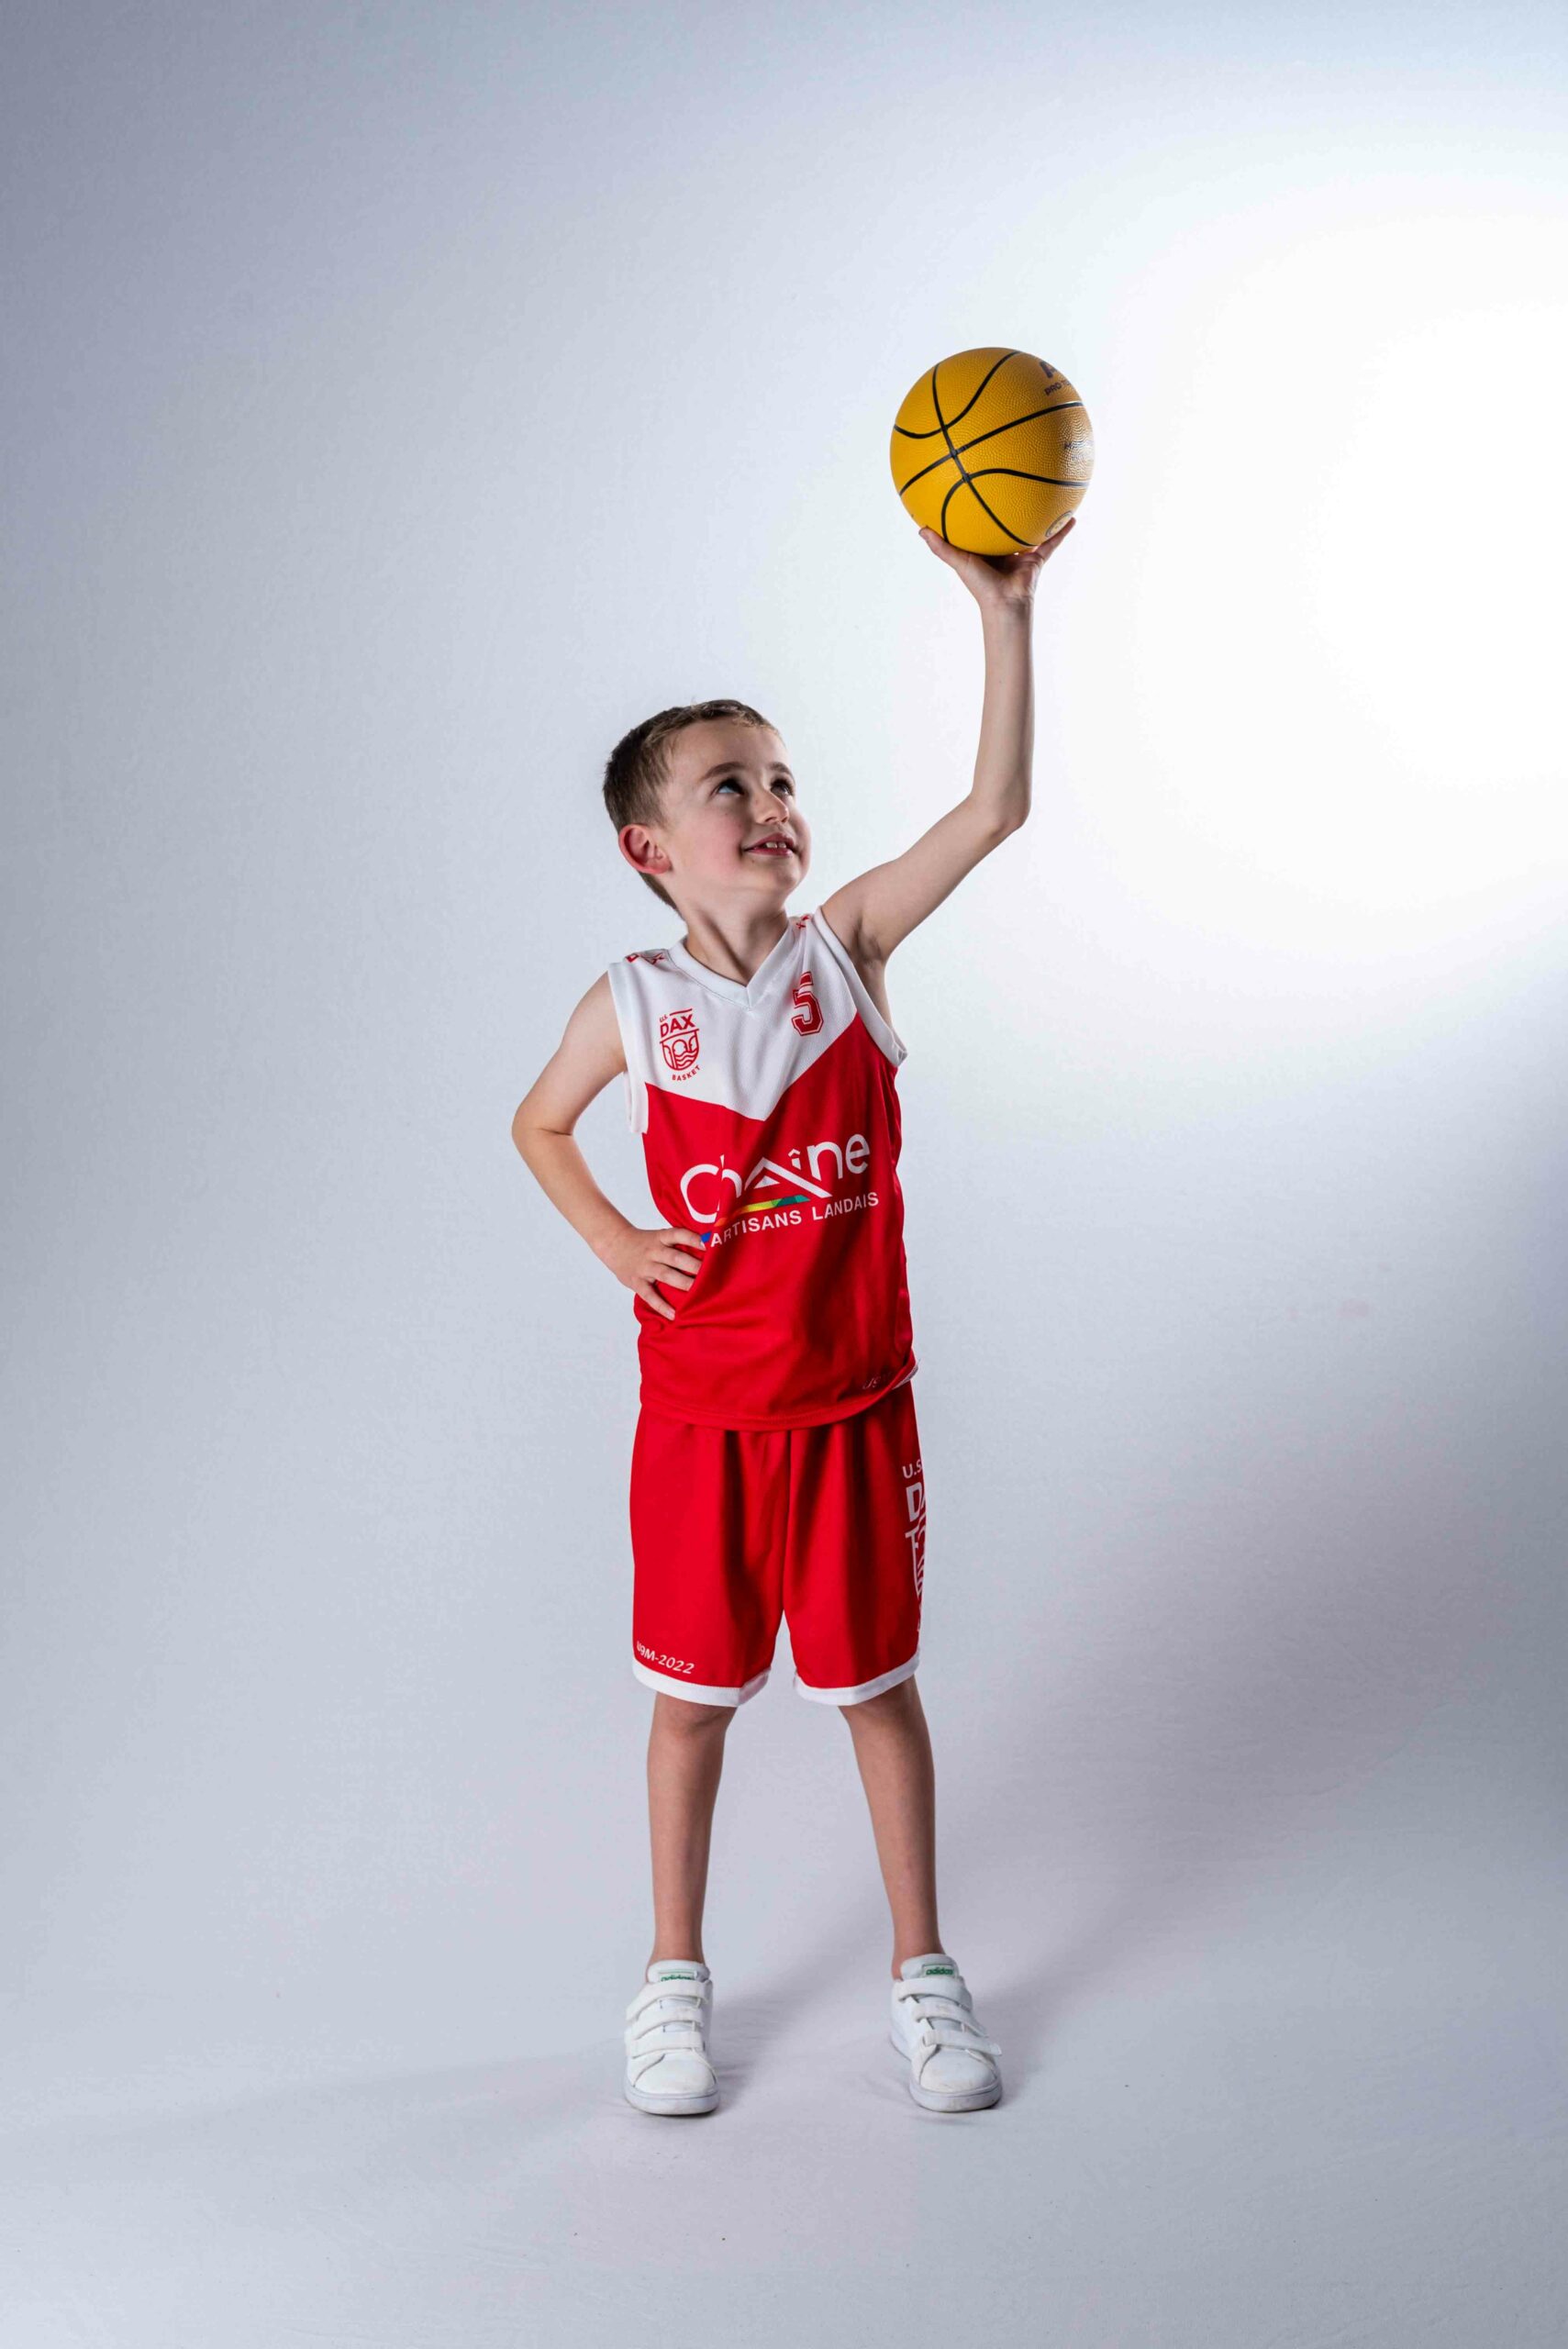 Media Day Basketball USDax sport shooting photo sport